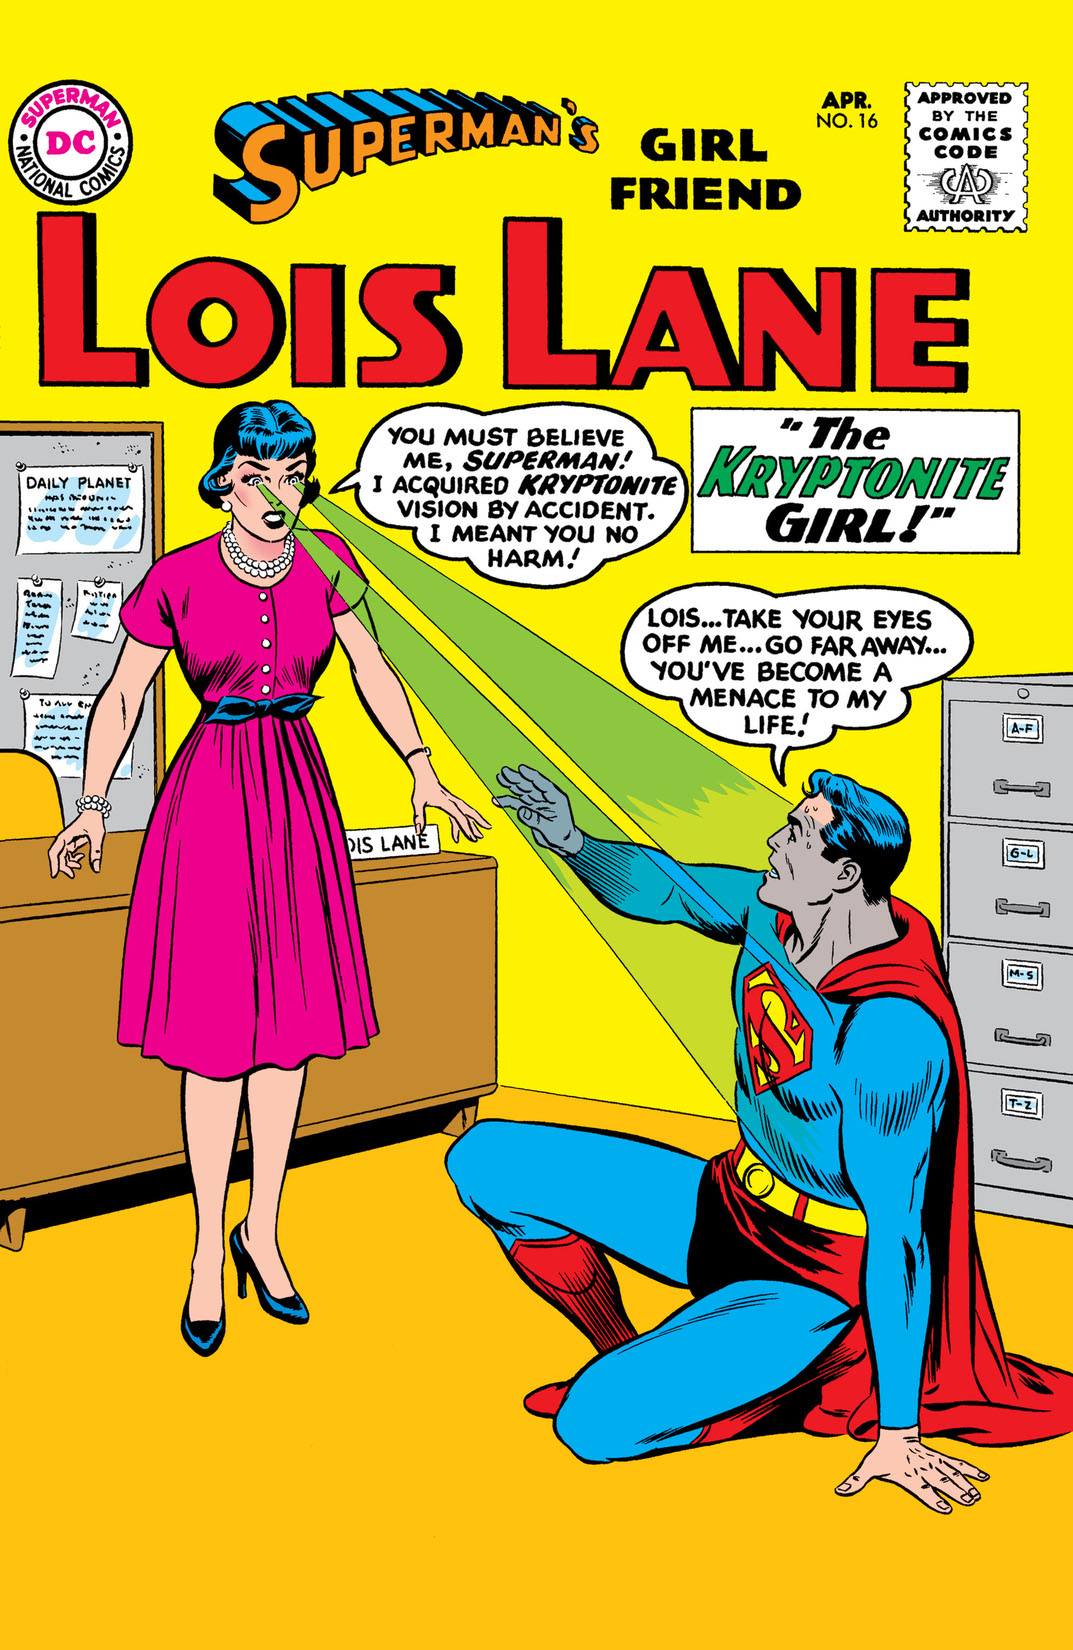 Superman's Girl Friend Lois Lane #16 preview images